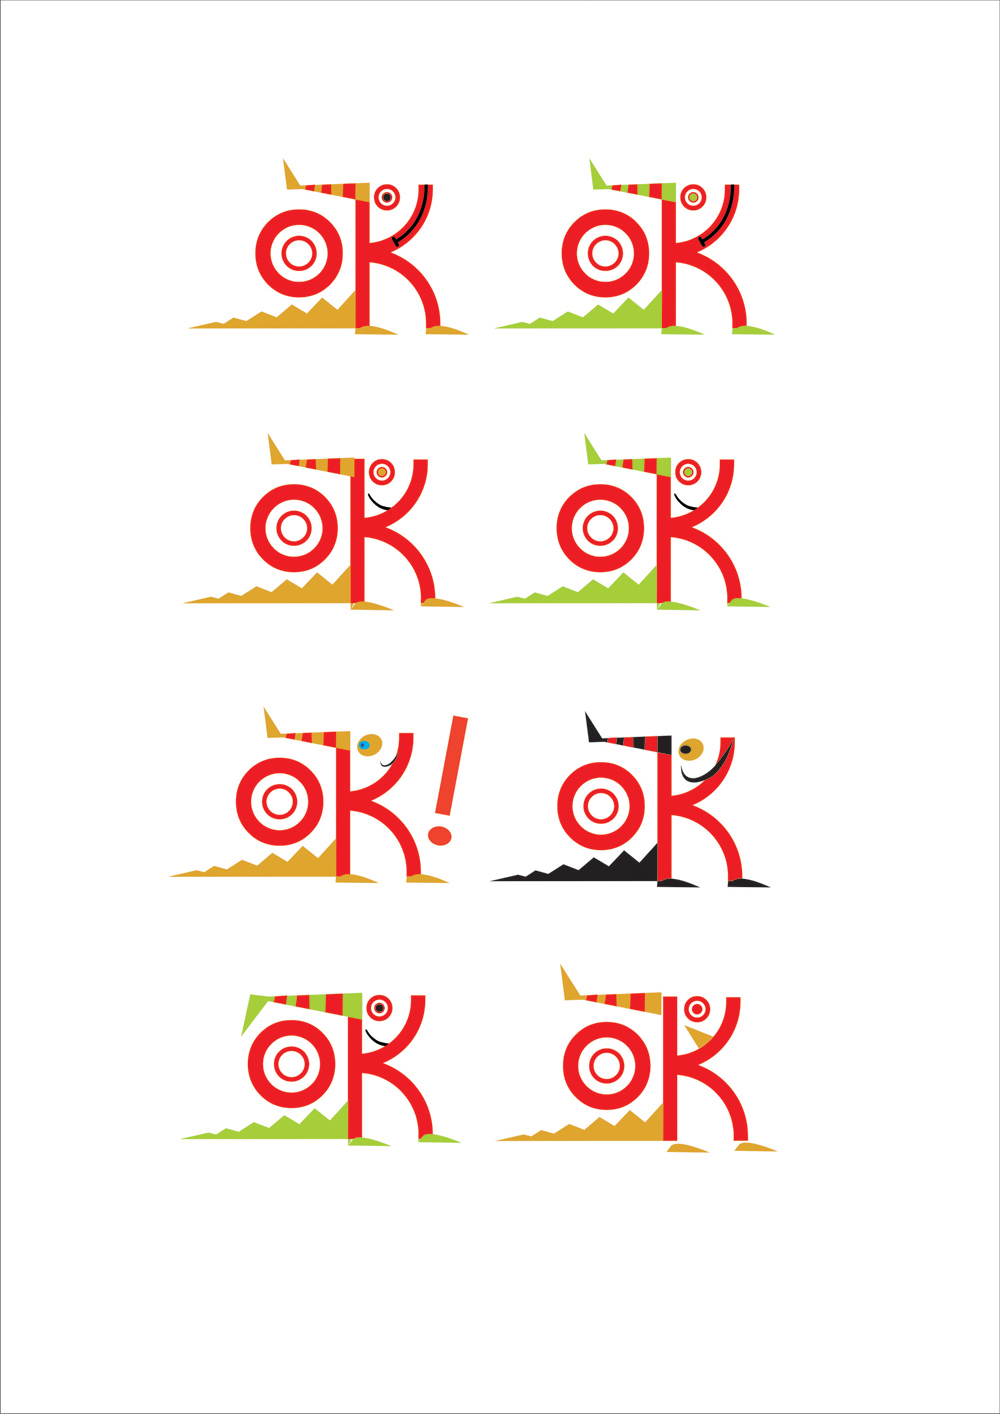 O`K